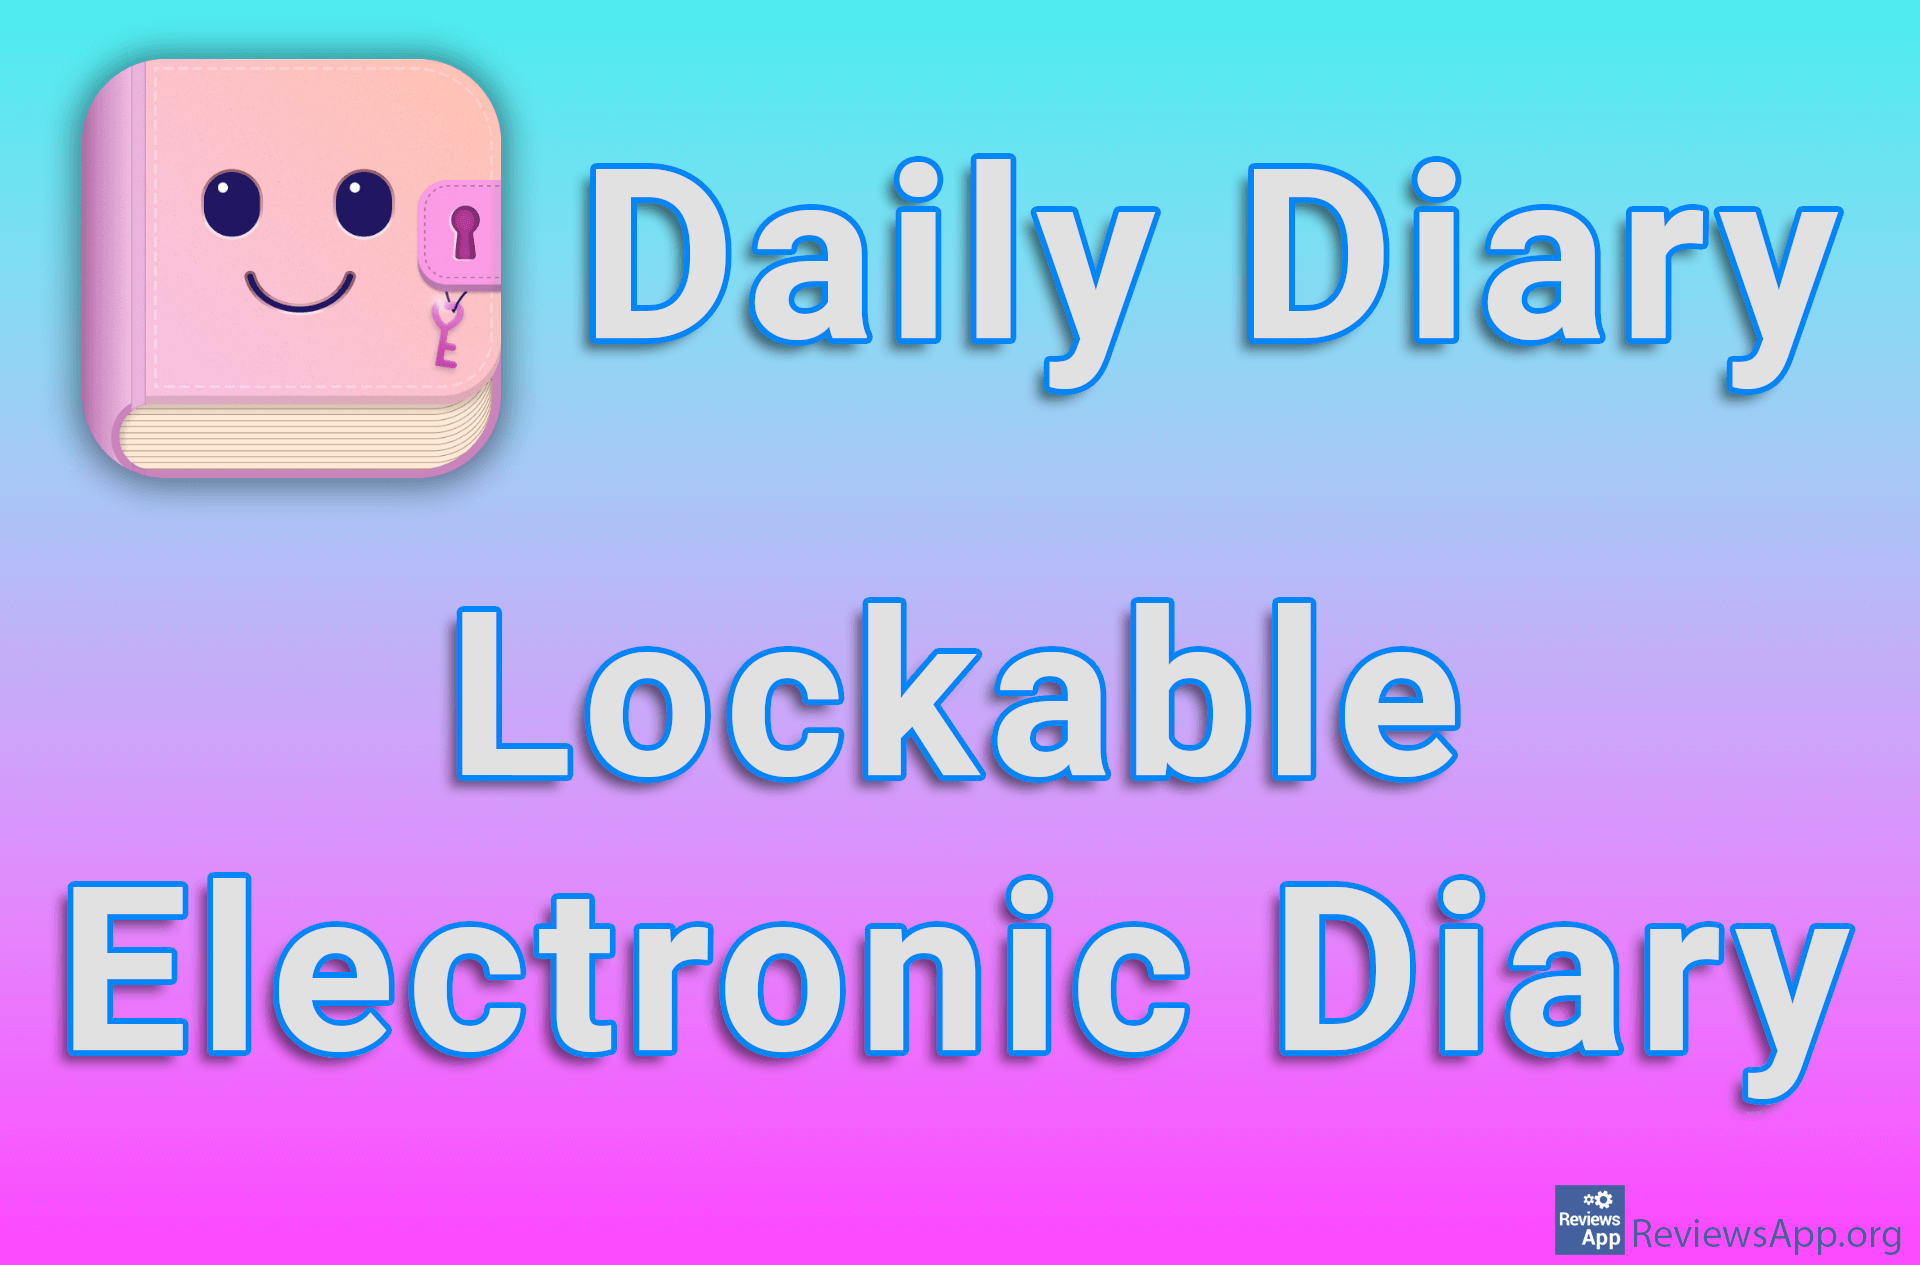 Daily Diary – Lockable Electronic Diary